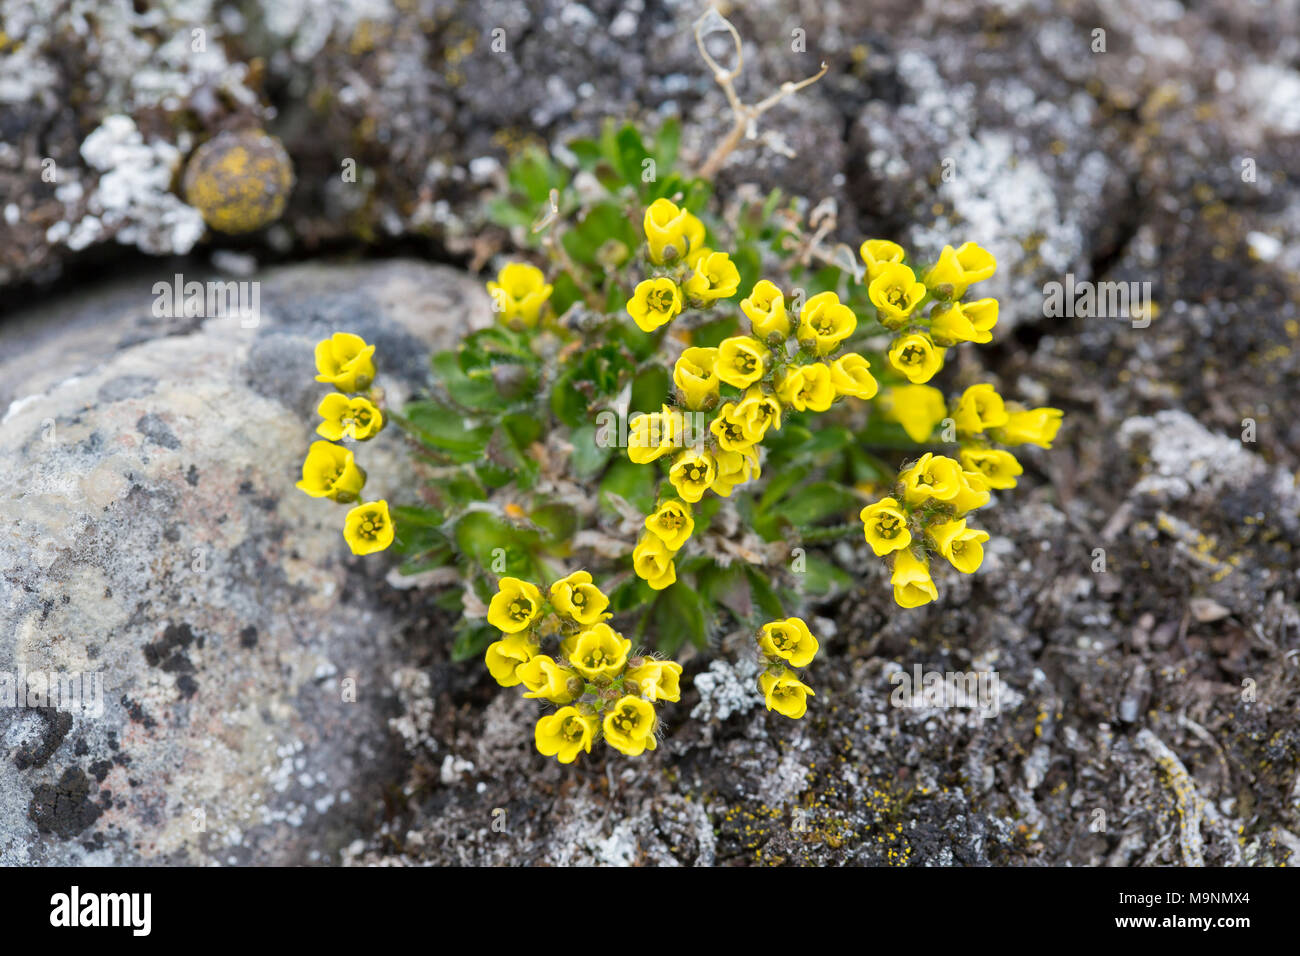 Alpine Draba / Alpine whitlow grass (Draba alpina L.) in flower among rocks, Svalbard / Spitsbergen, Norway Stock Photo